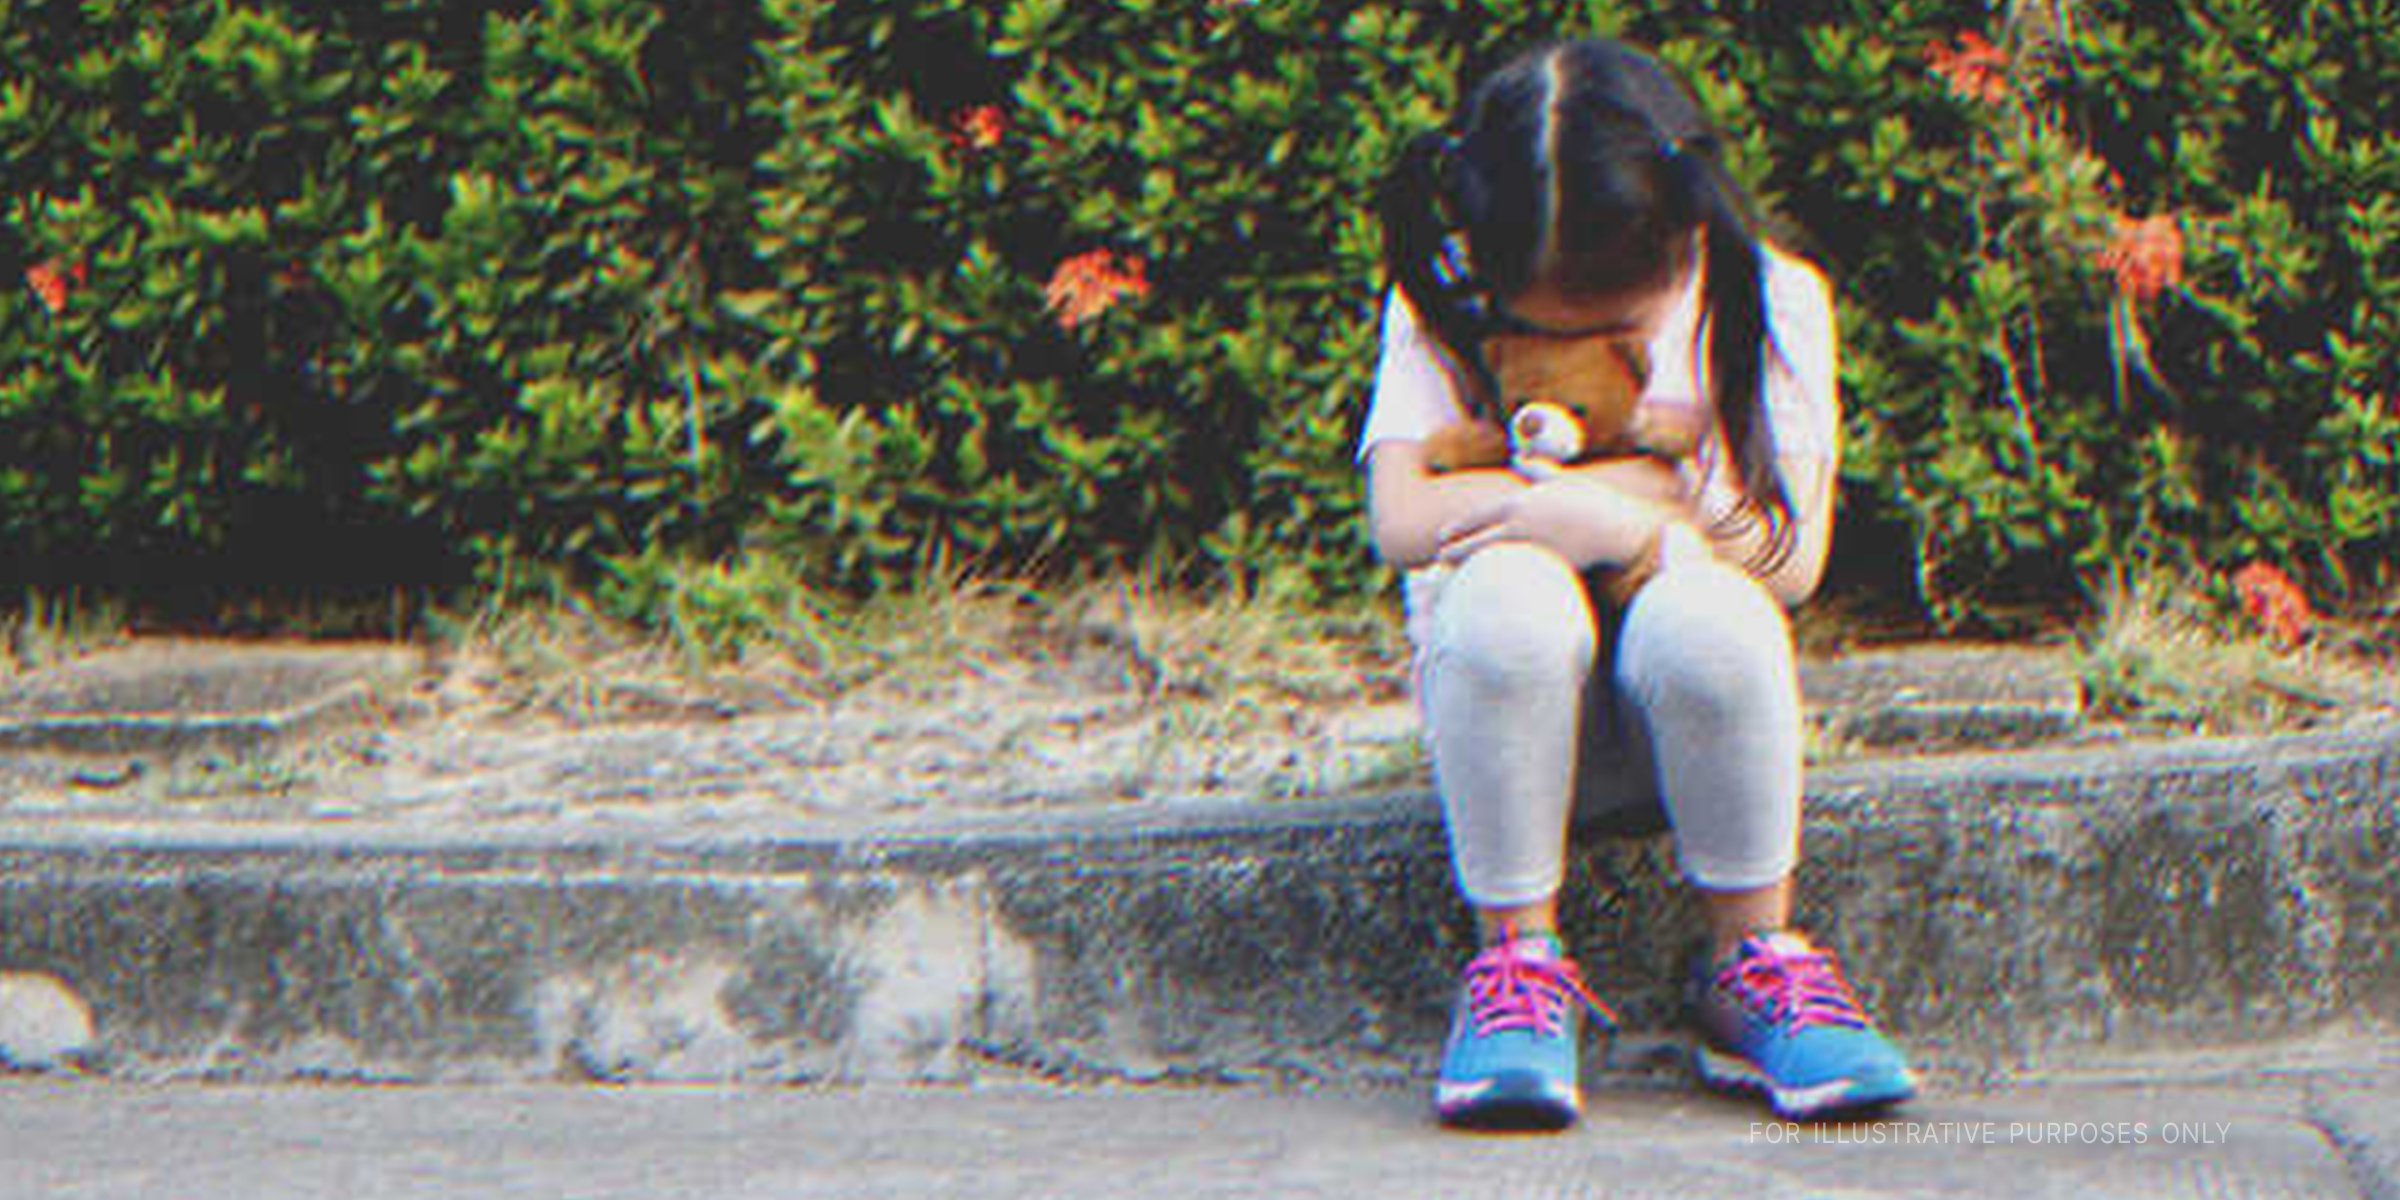 Sad little girl on roadside | Source: Shutterstock